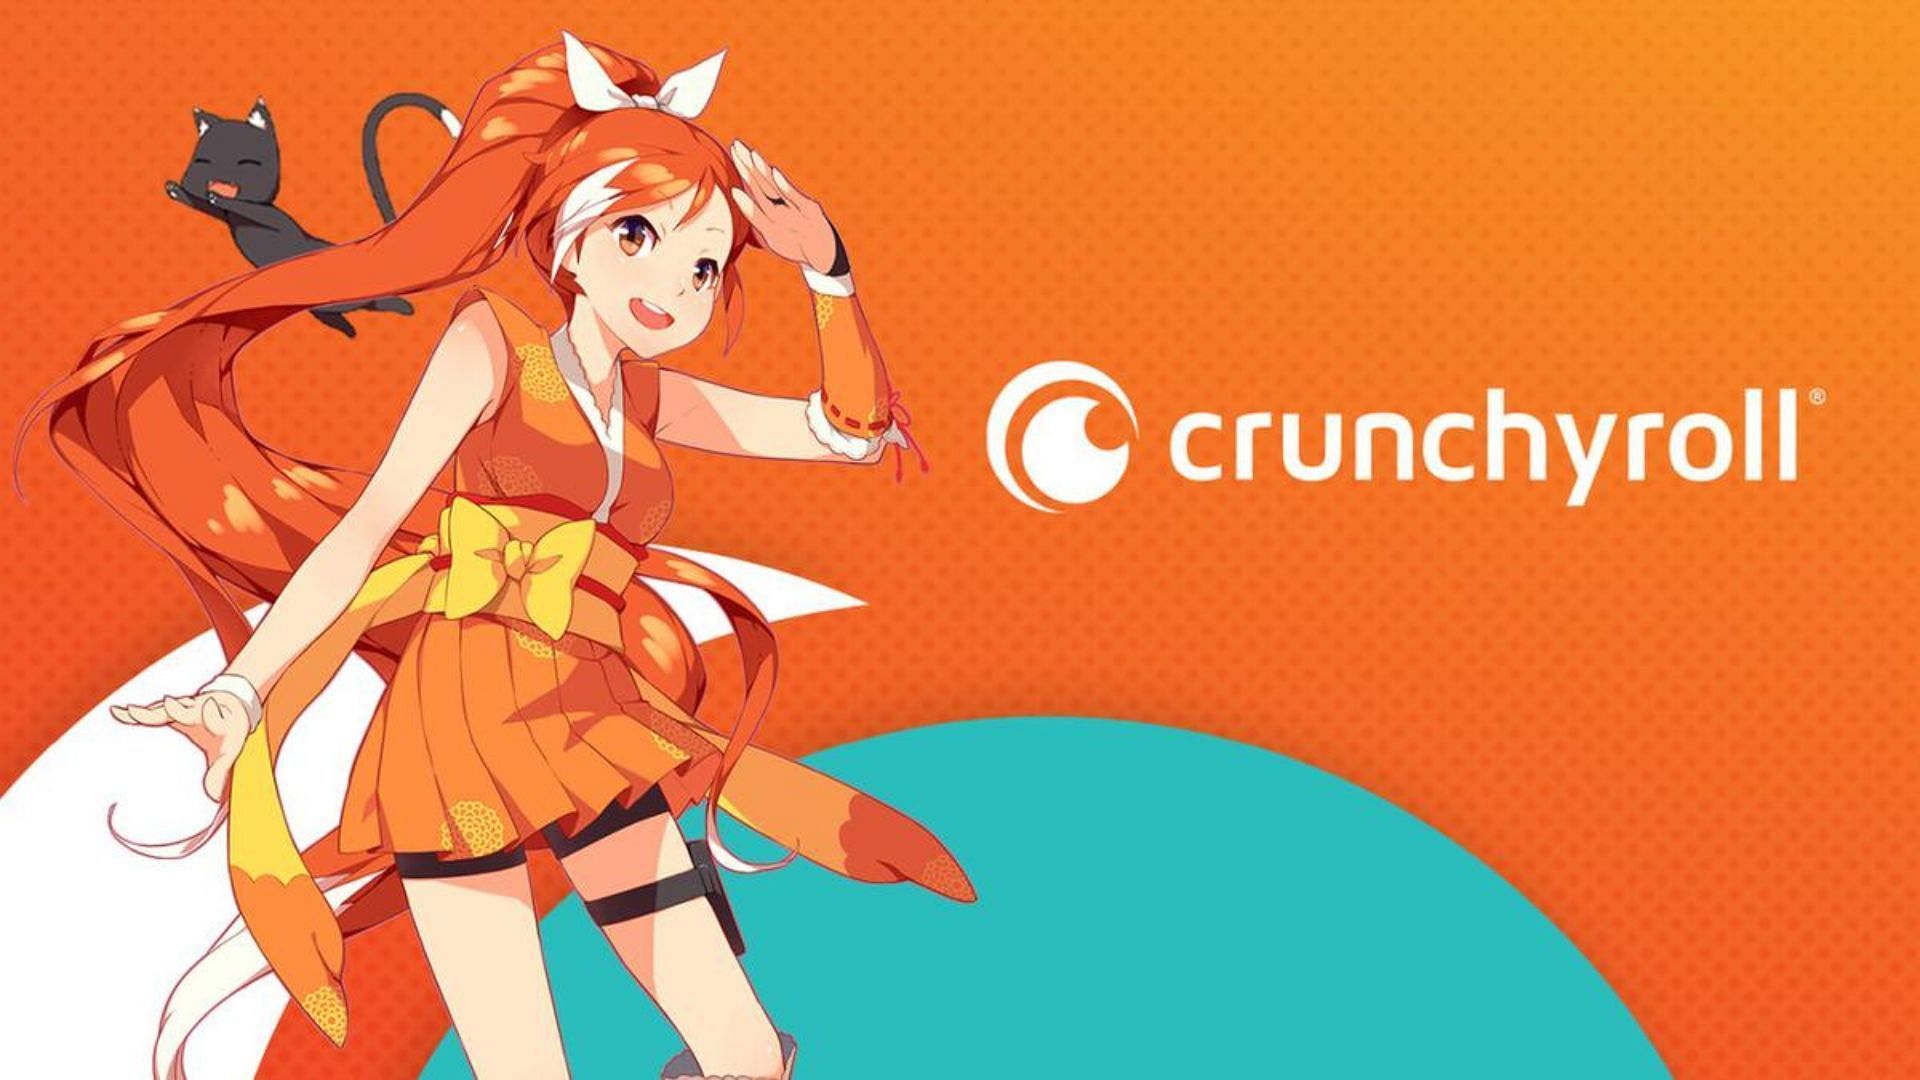 ICv2: Crunchyroll to Shut Down Online Retailer RightStuf